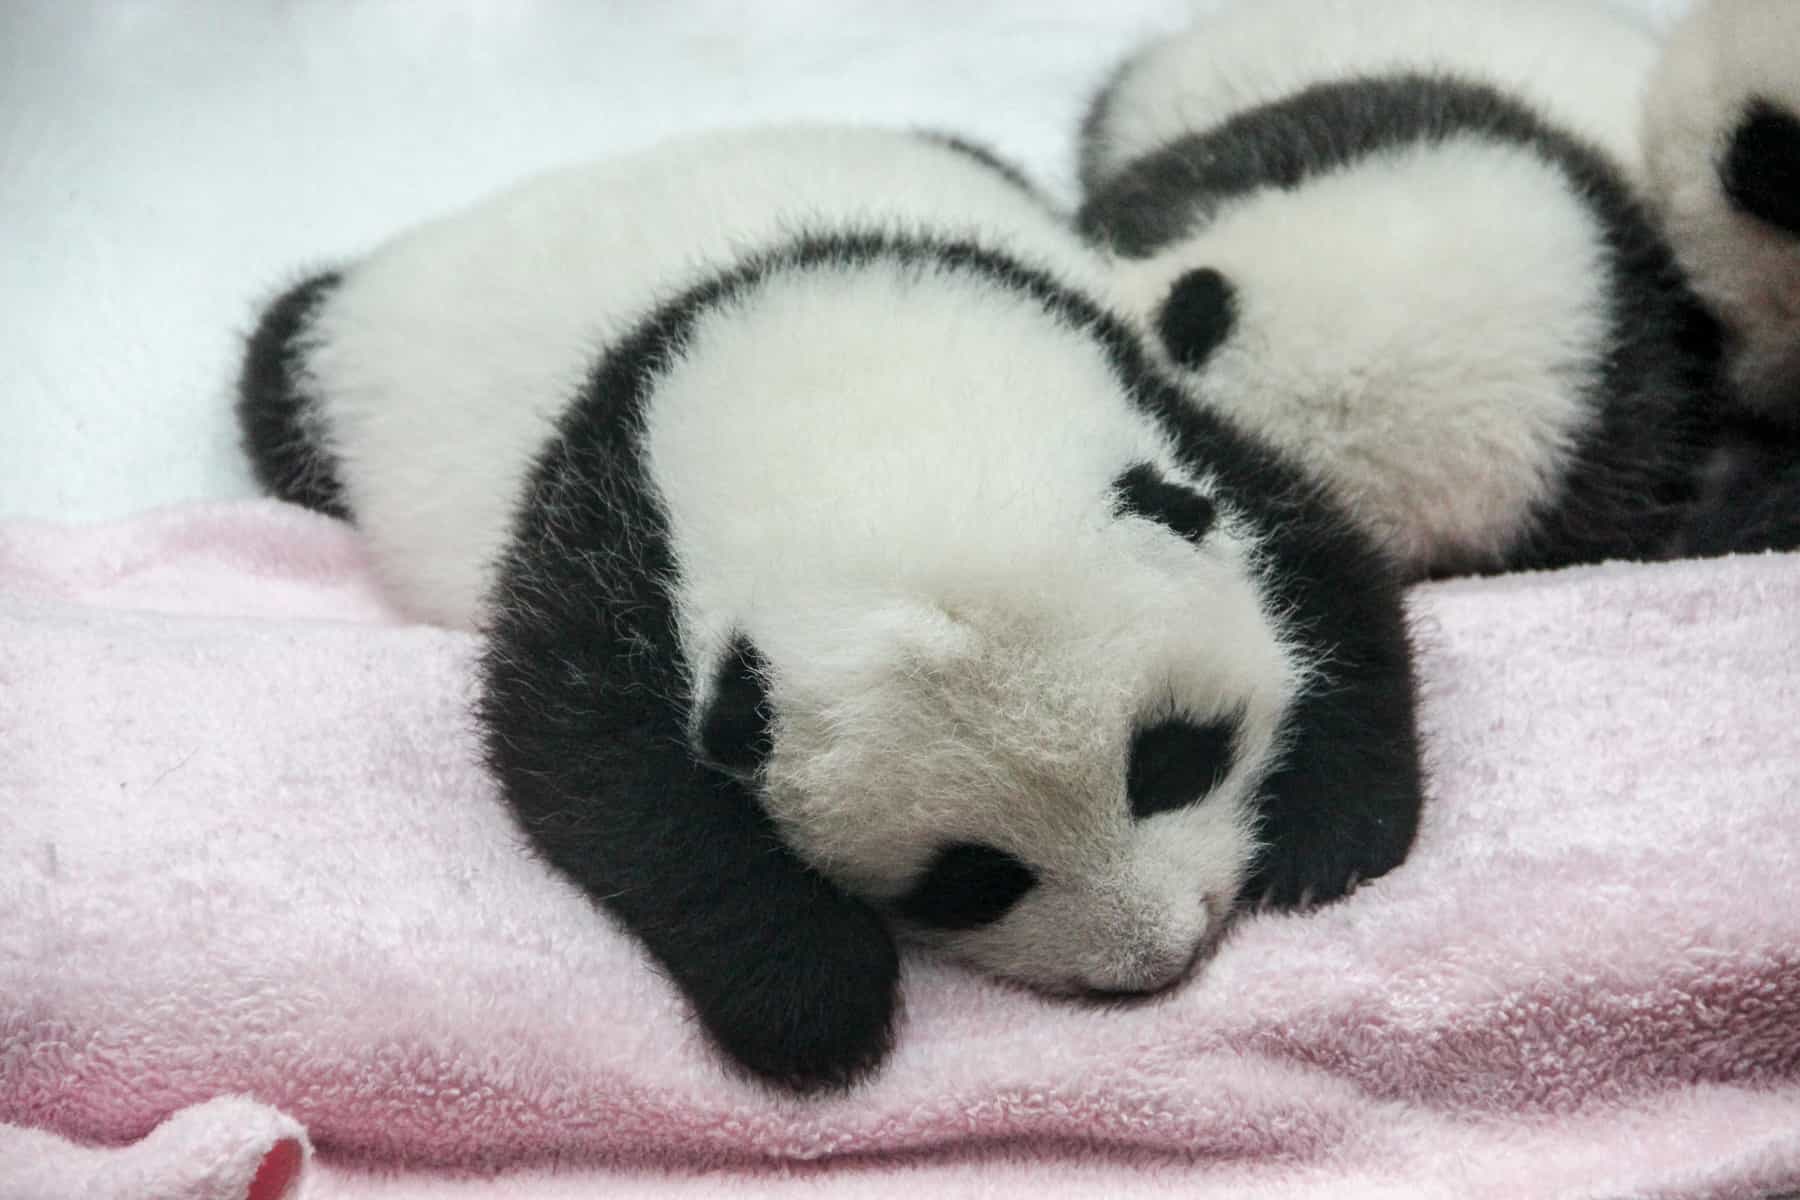 A baby panda sleeps on a pink blanket at the breeding base in Chengdu